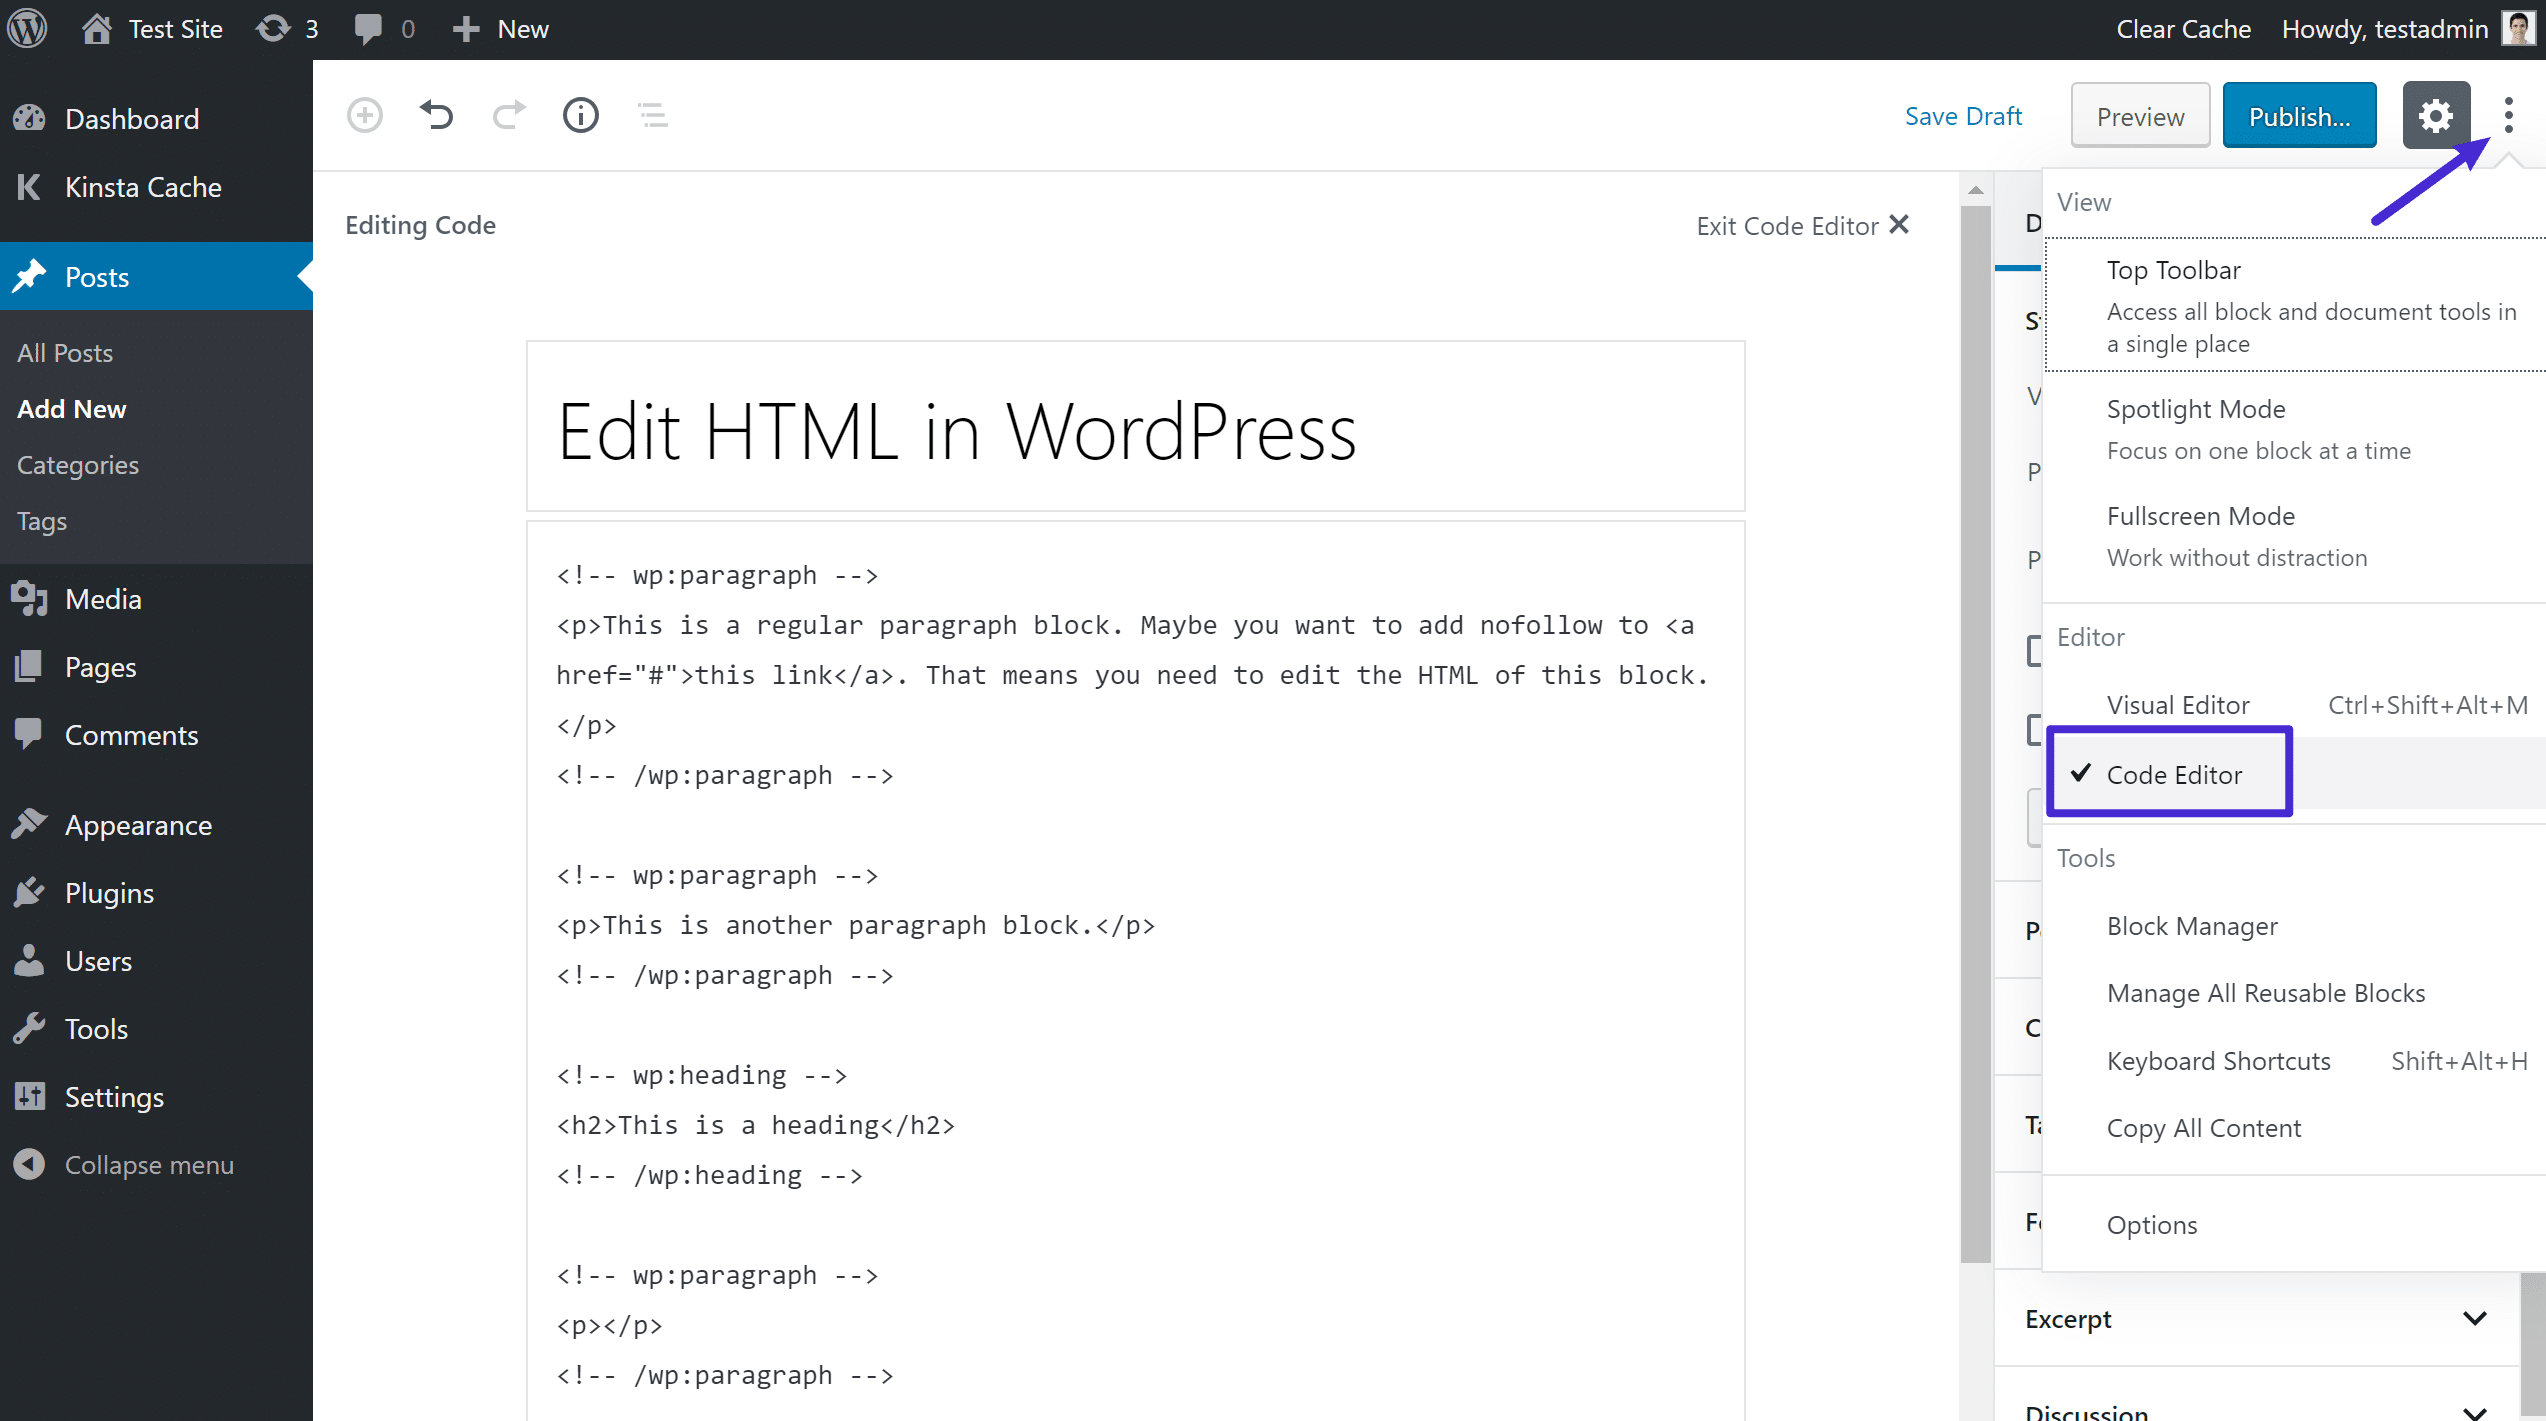 Can we code in WordPress?